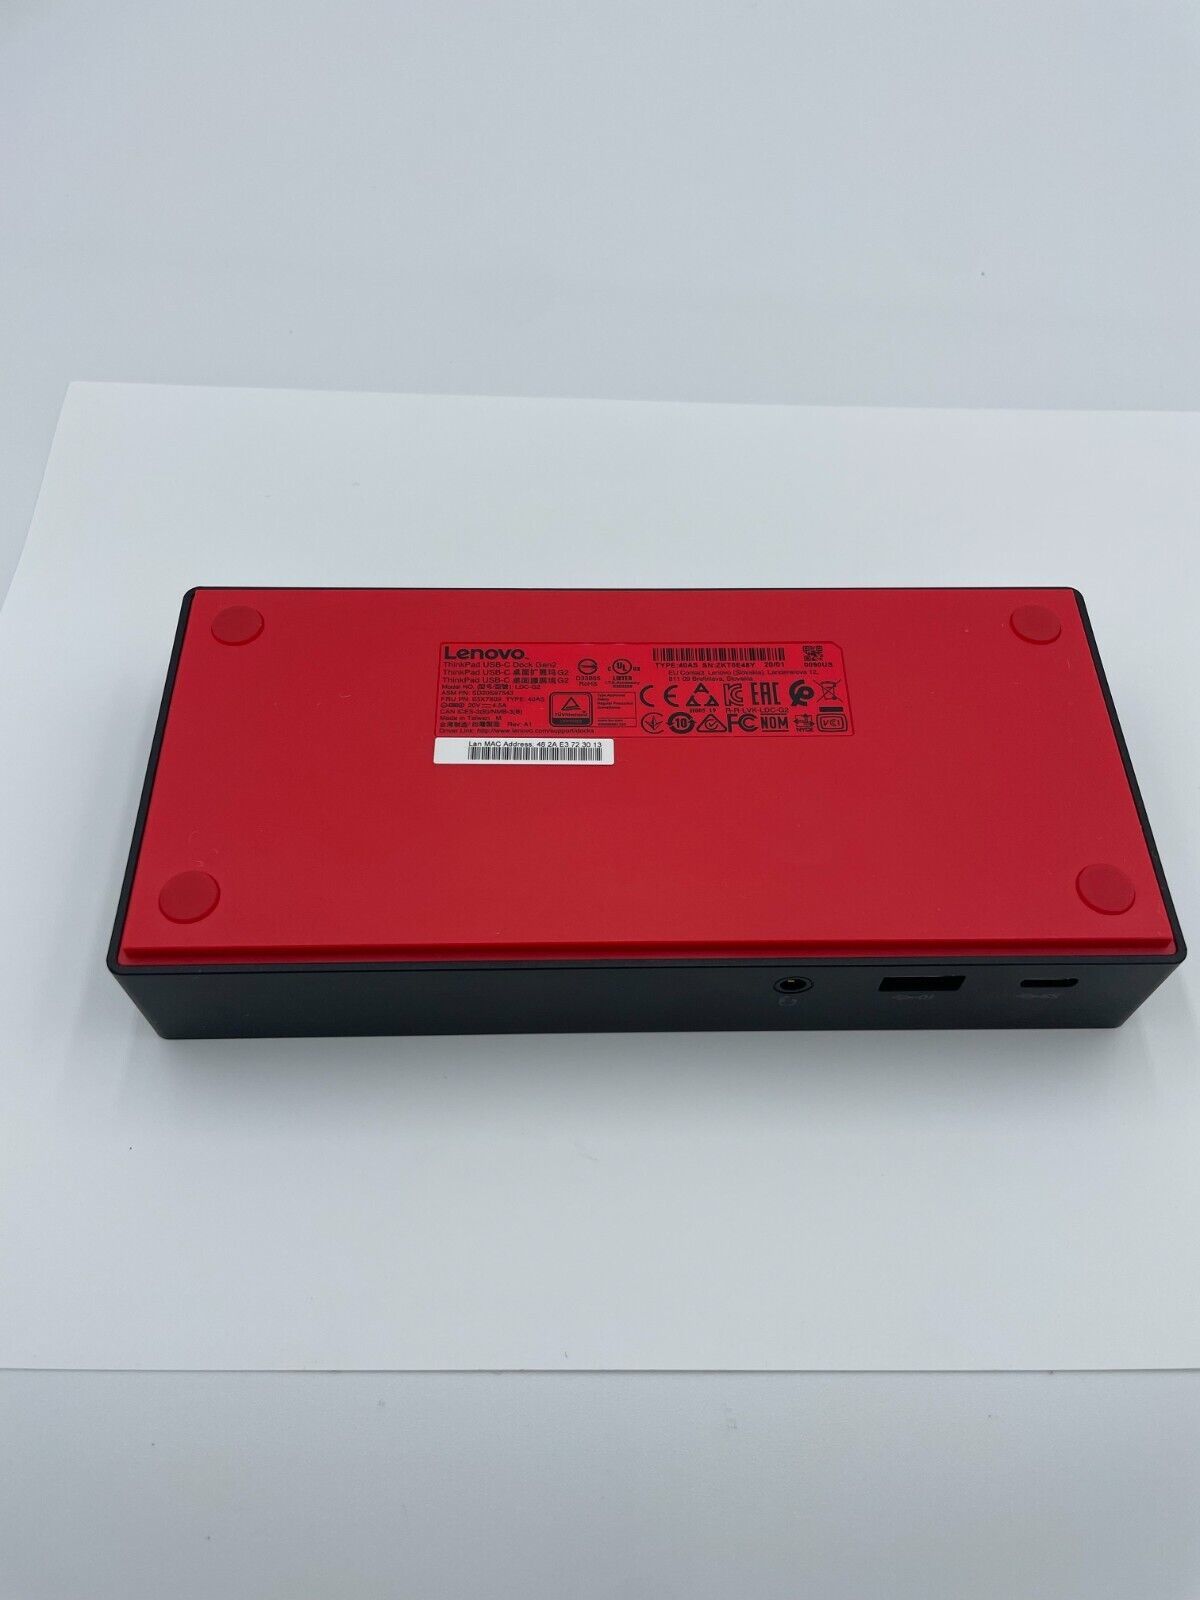 Lenovo Dock Gen2 ThinkPad USB-C LDC-G2 40AS Docking Station 40AS0090US GENUINE - $98.95